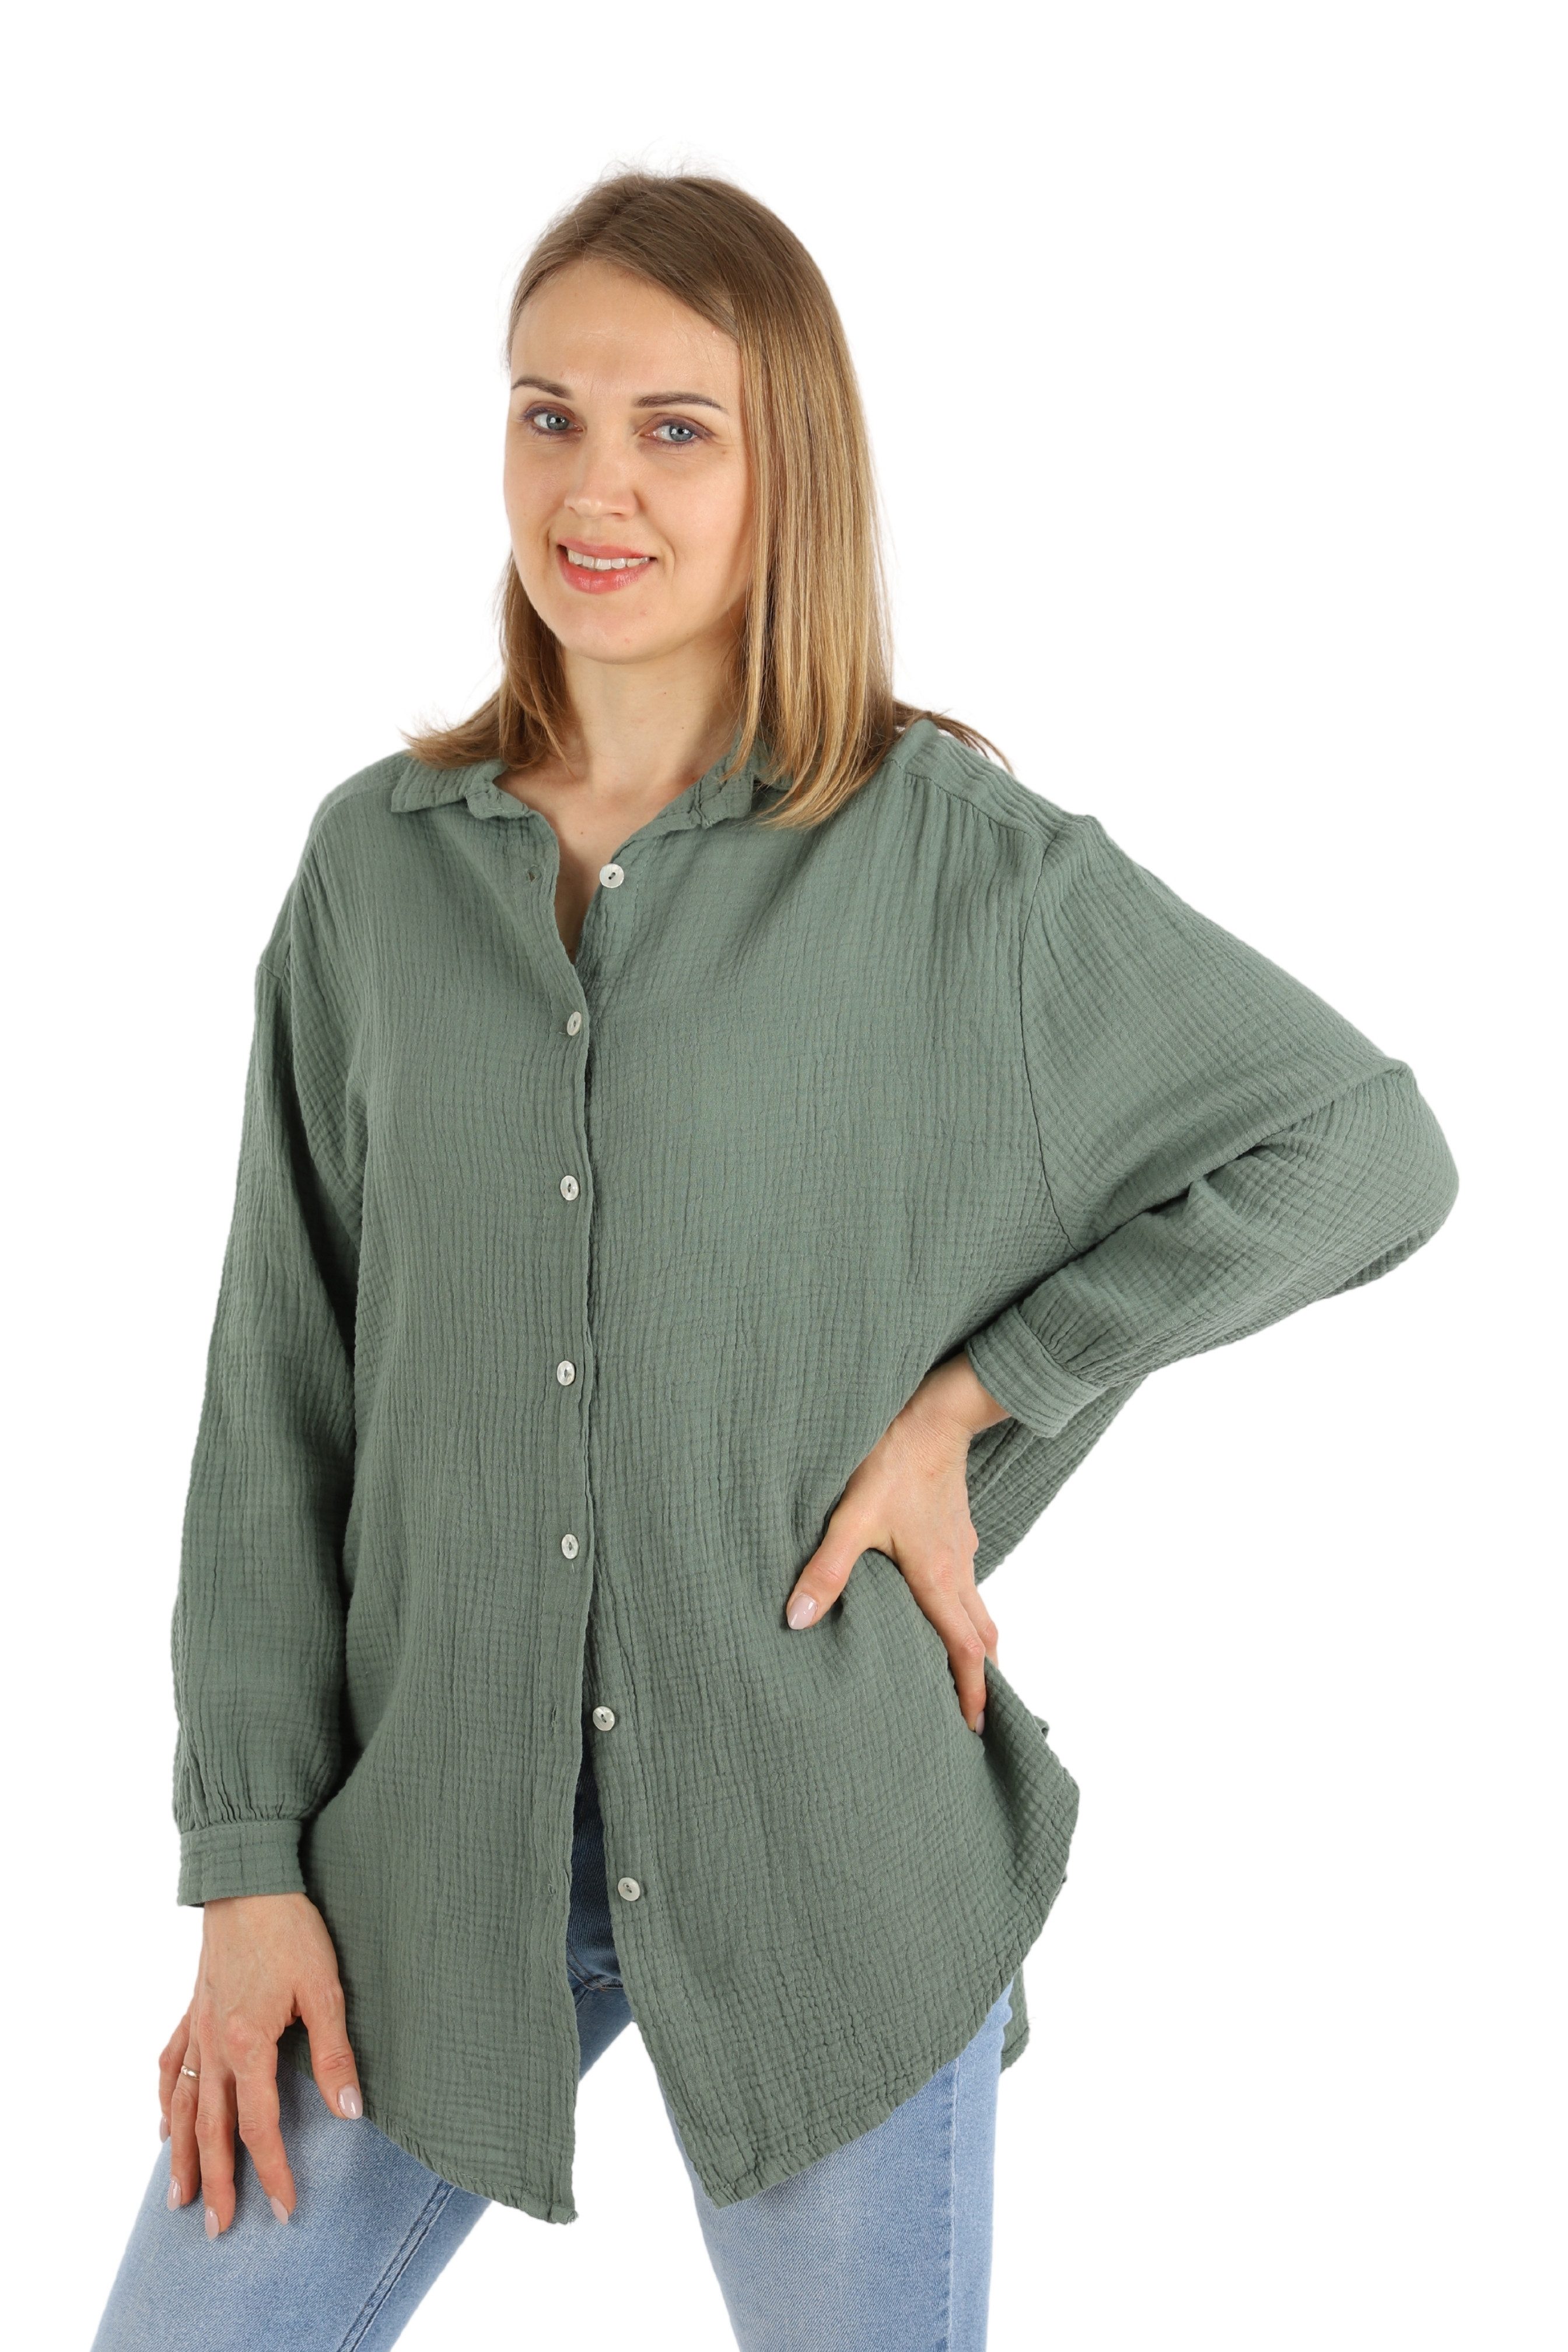 MIRROSI Longbluse Damen Musselin 100% Baumwolle Bluse OVERSIZE Design (Einheitsgröße) Langarm Hemdbluse MADE IN ITALY